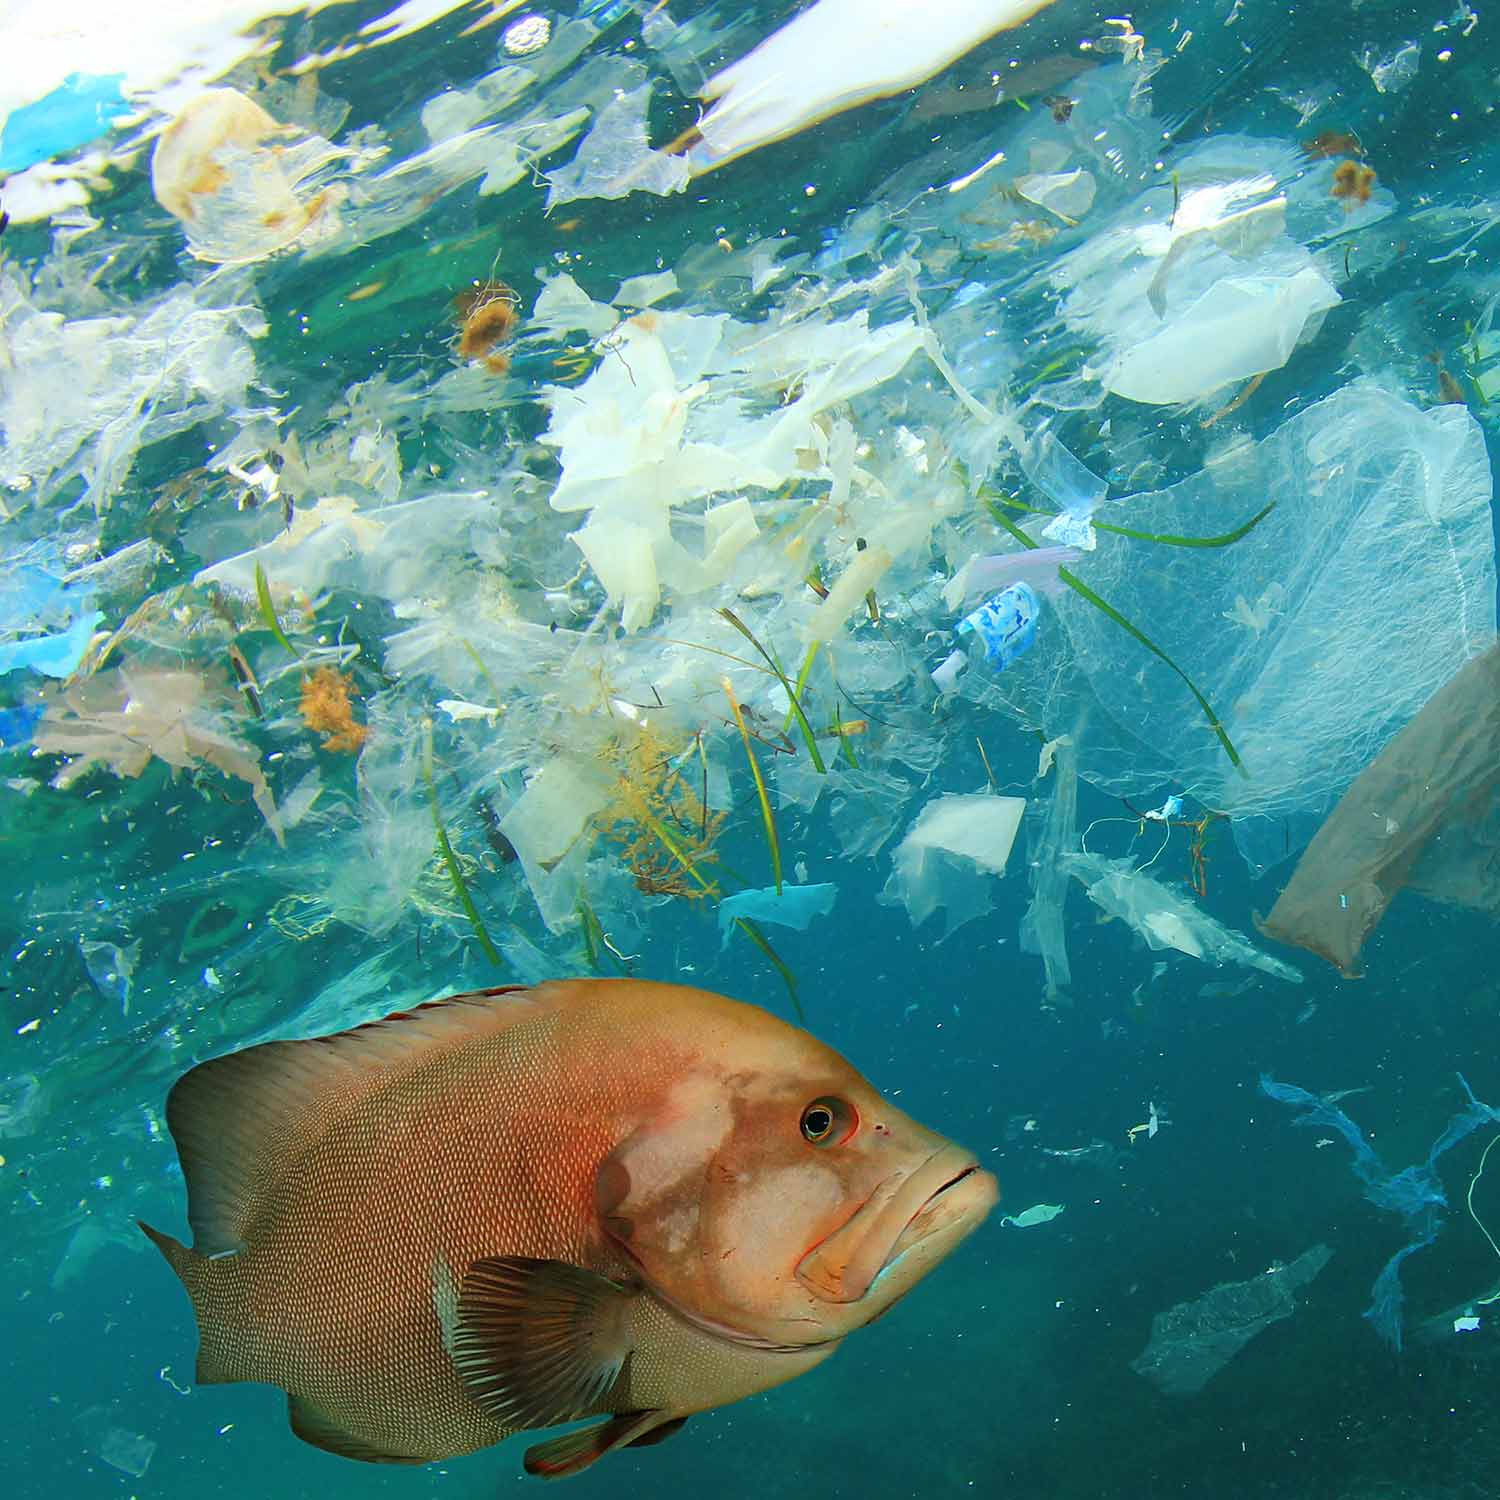 Bioplastics breaking down into micro plastics in marine environment